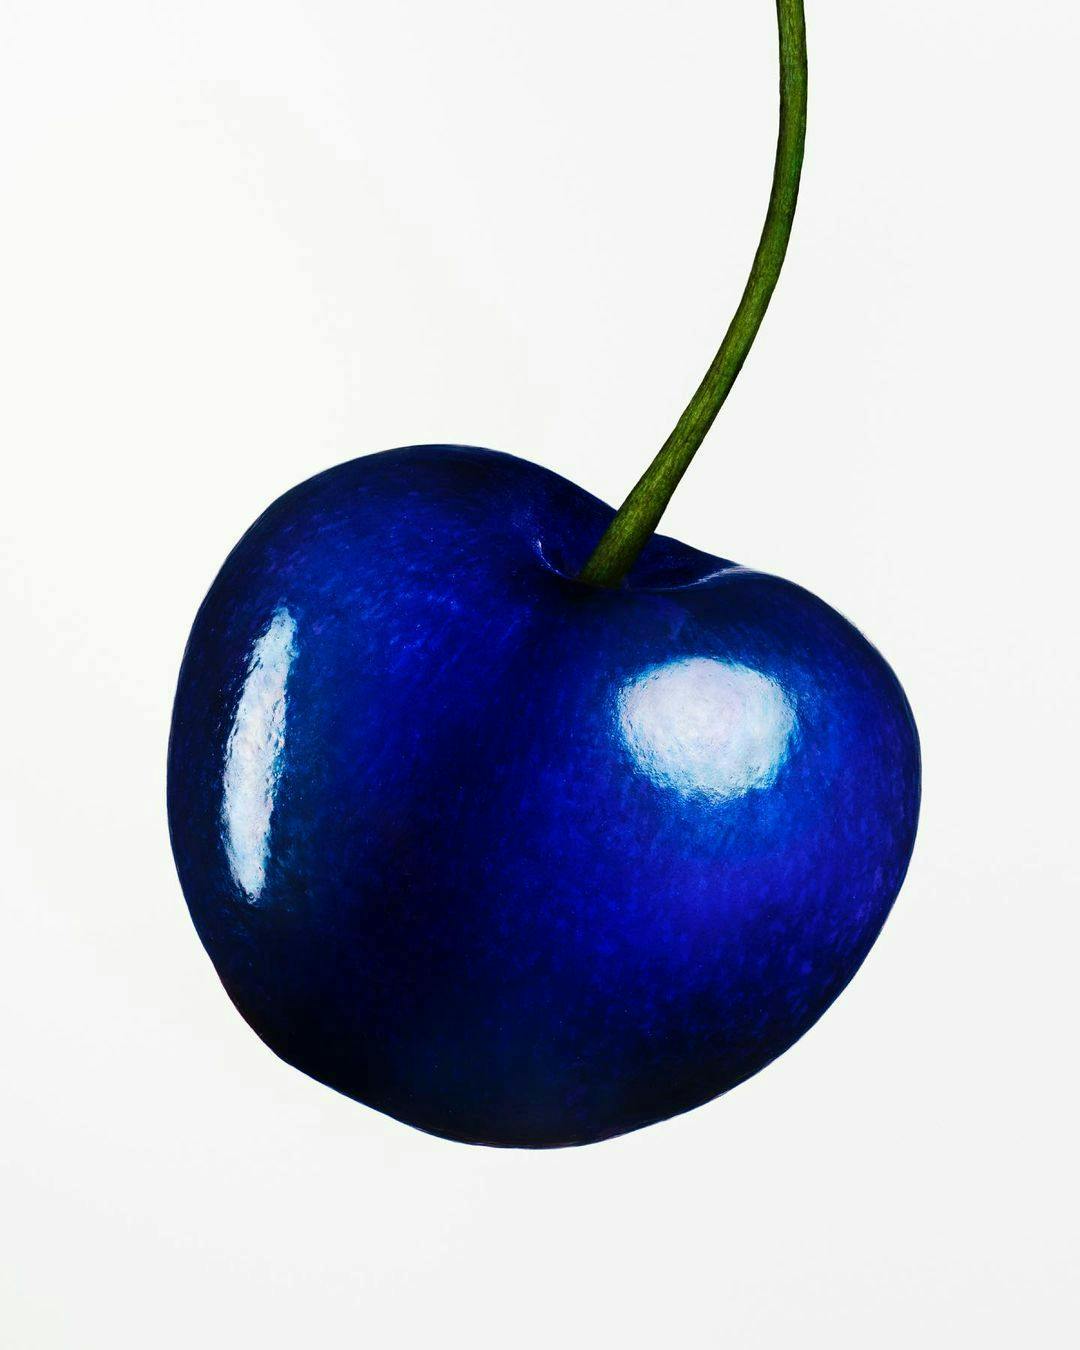 food fruit plant produce cherry apple